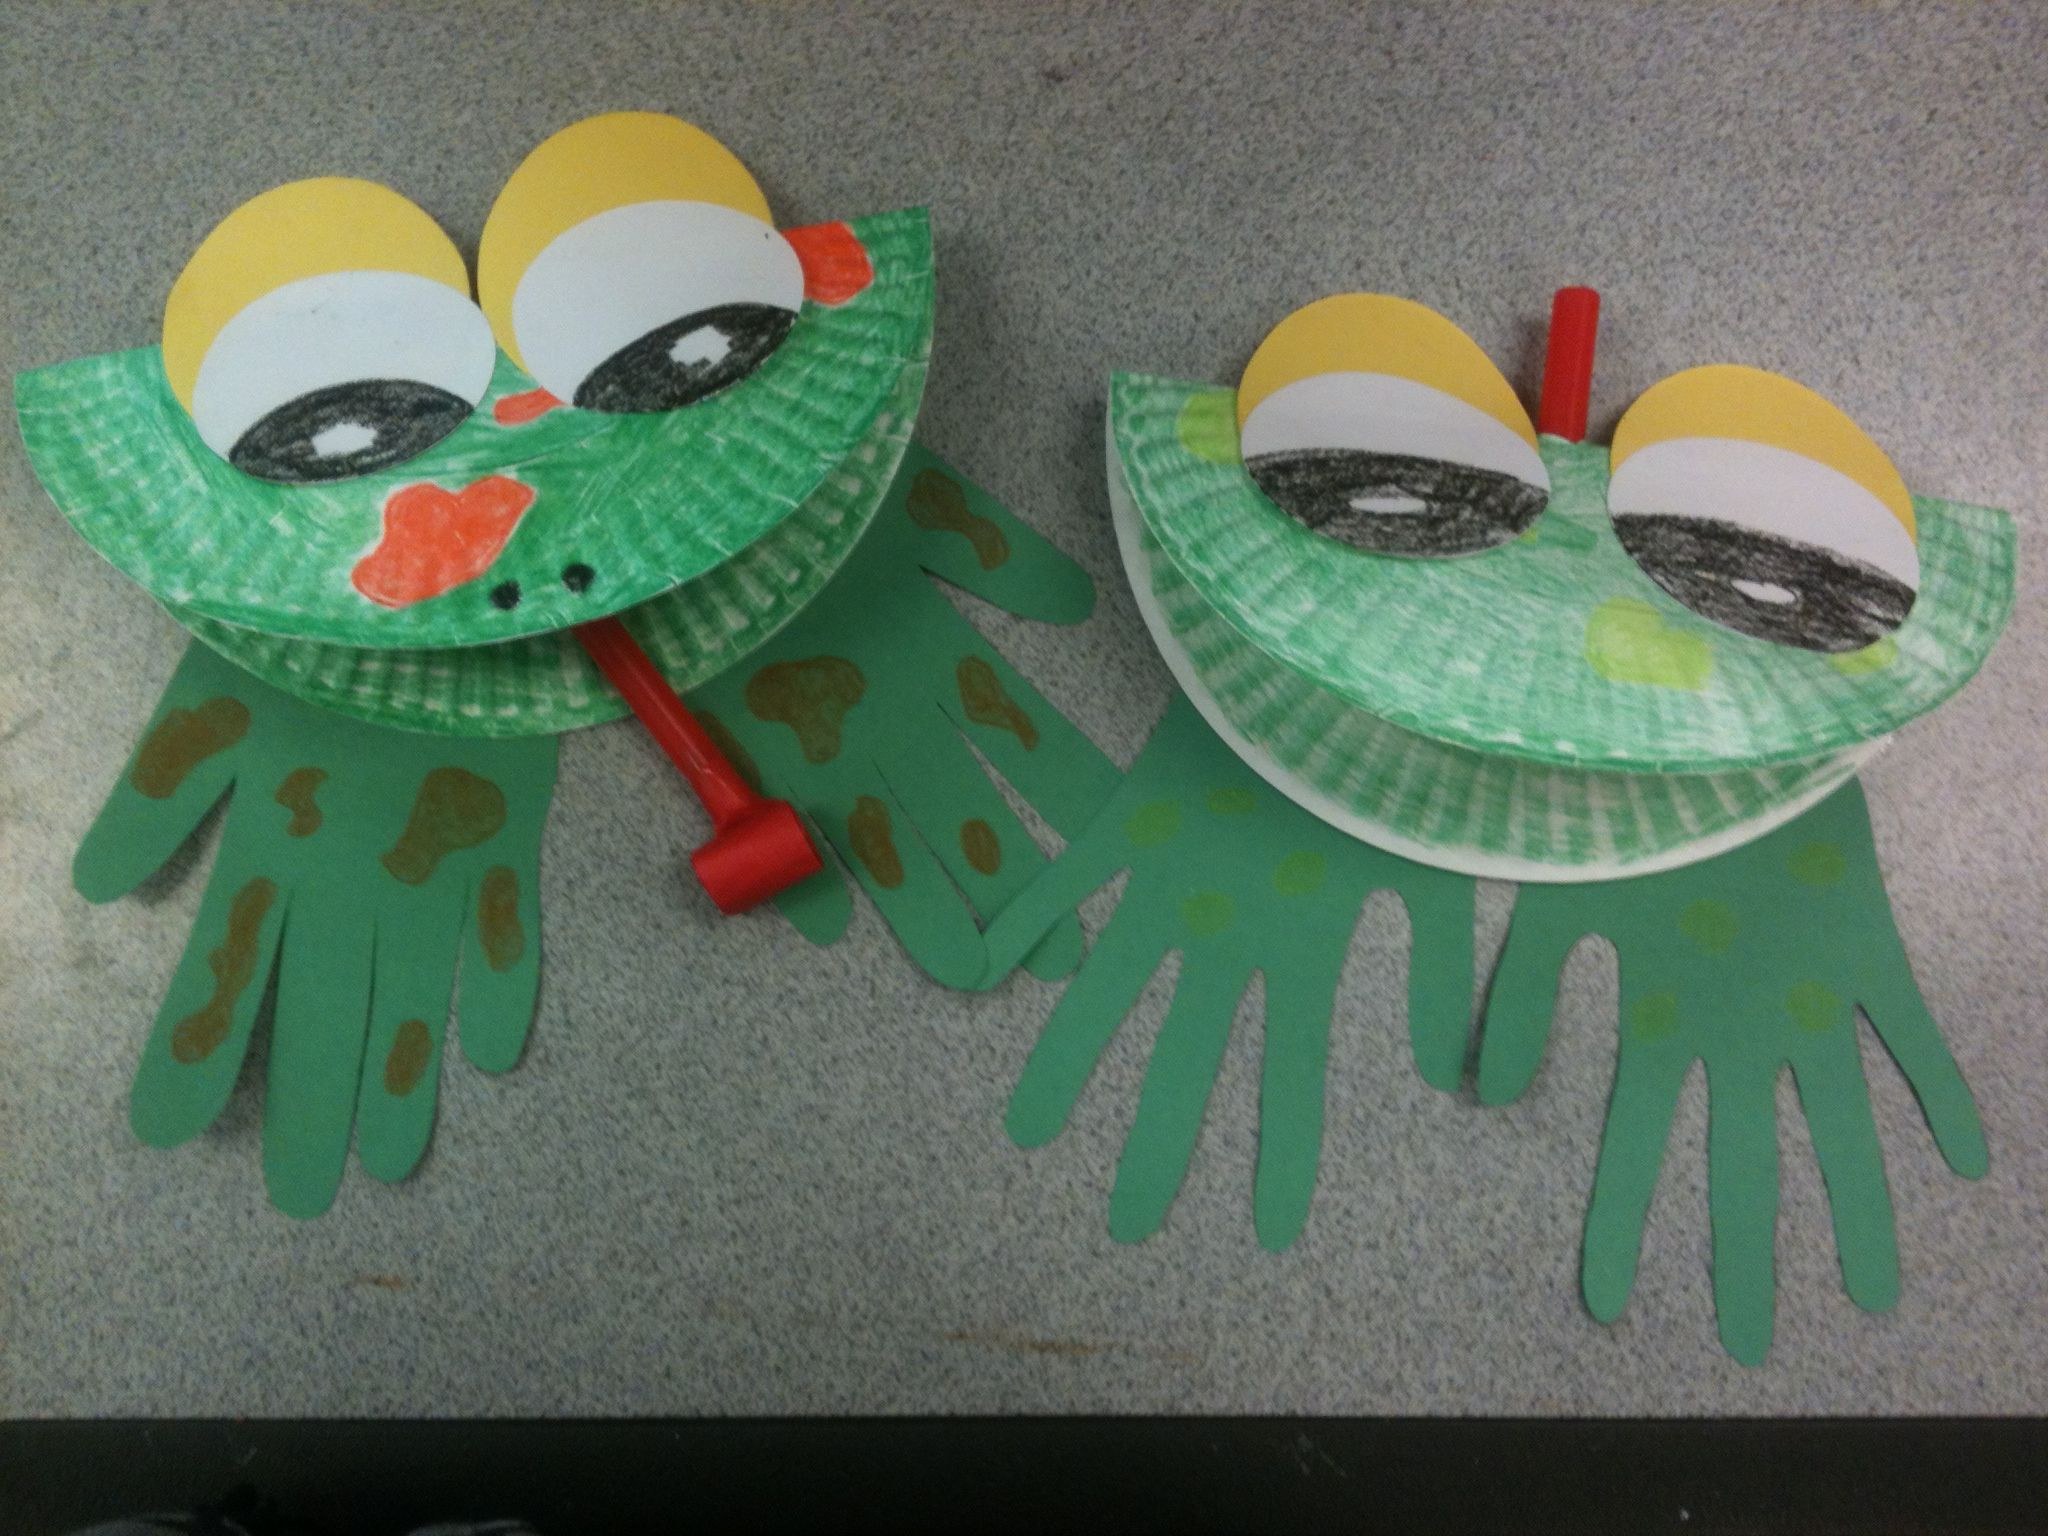 Frog Art For Toddlers
 Best 25 Frog crafts ideas on Pinterest